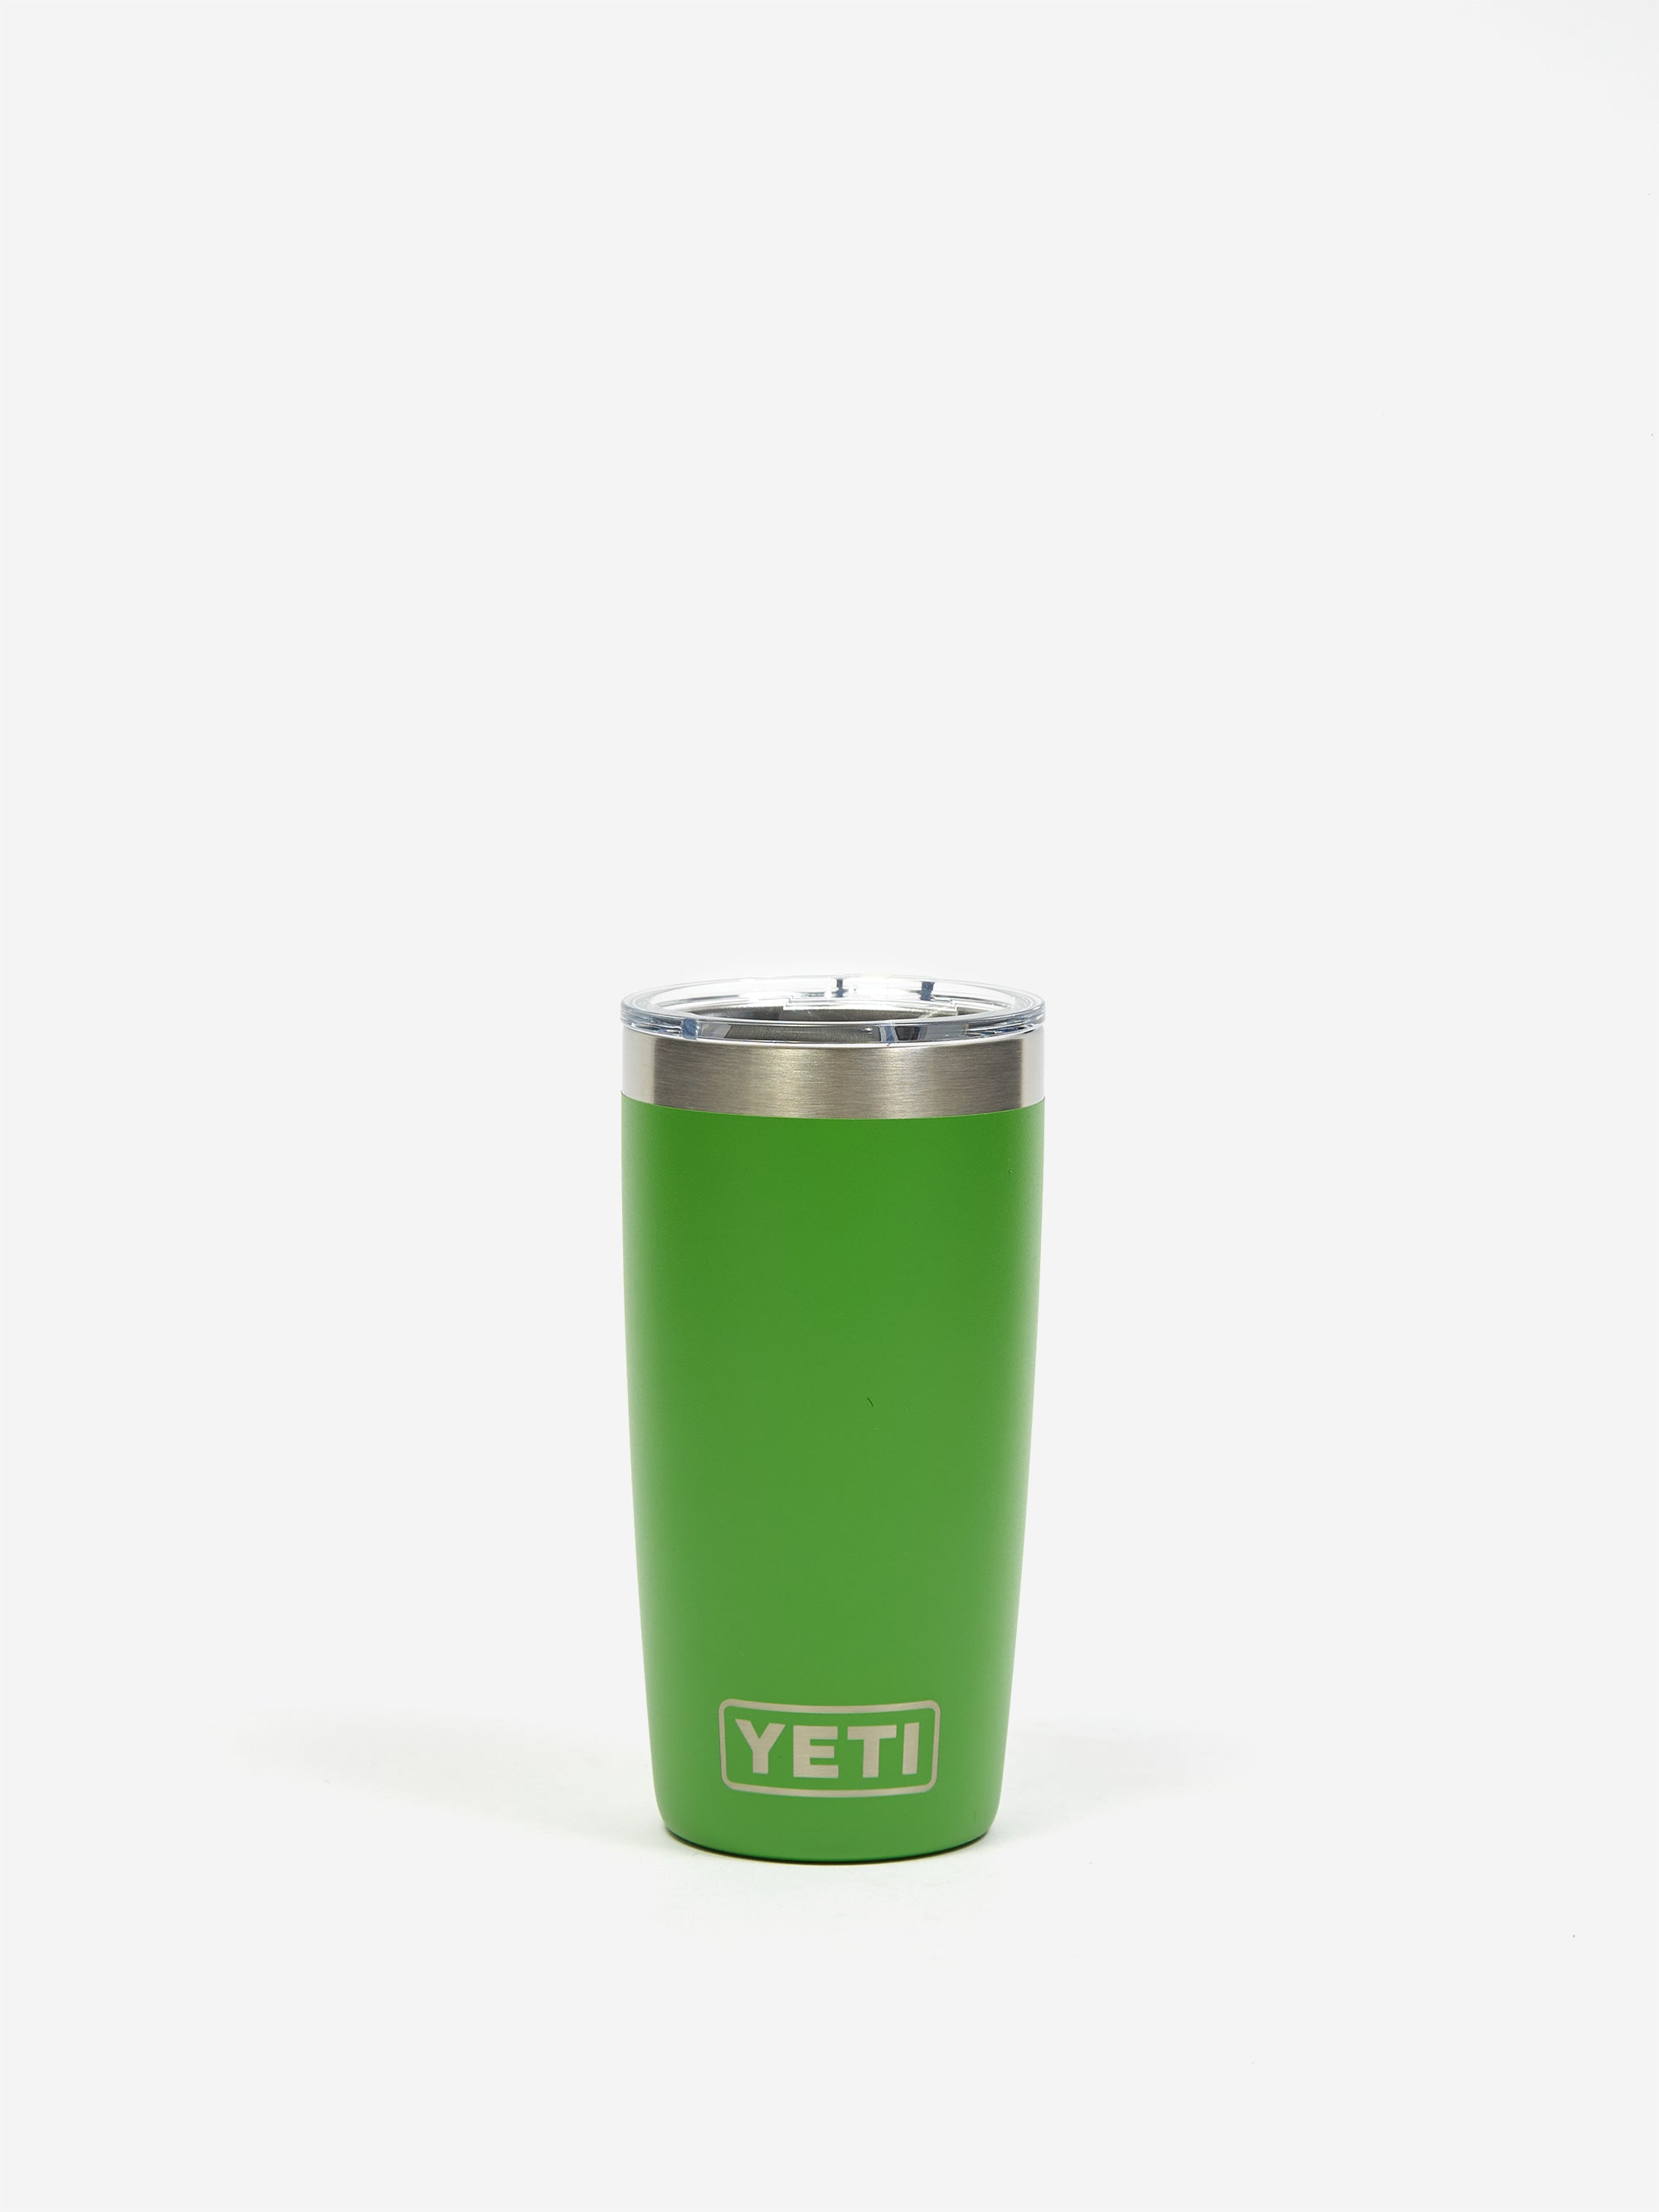 Yeti Rambler 10 oz Tumbler - Canopy Green